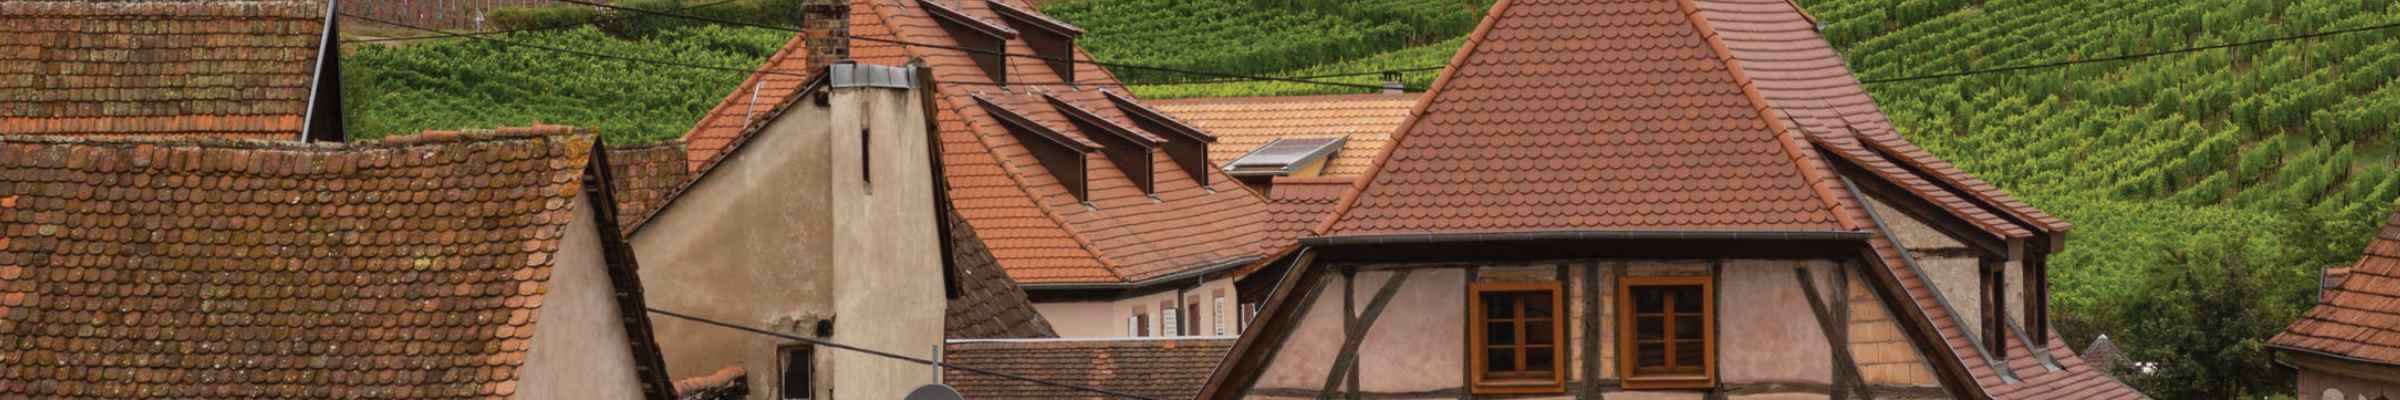 Vins d'Alsace : Riesling, Gewurztraminer, Muscat | Conroy Vins et Spiritueux